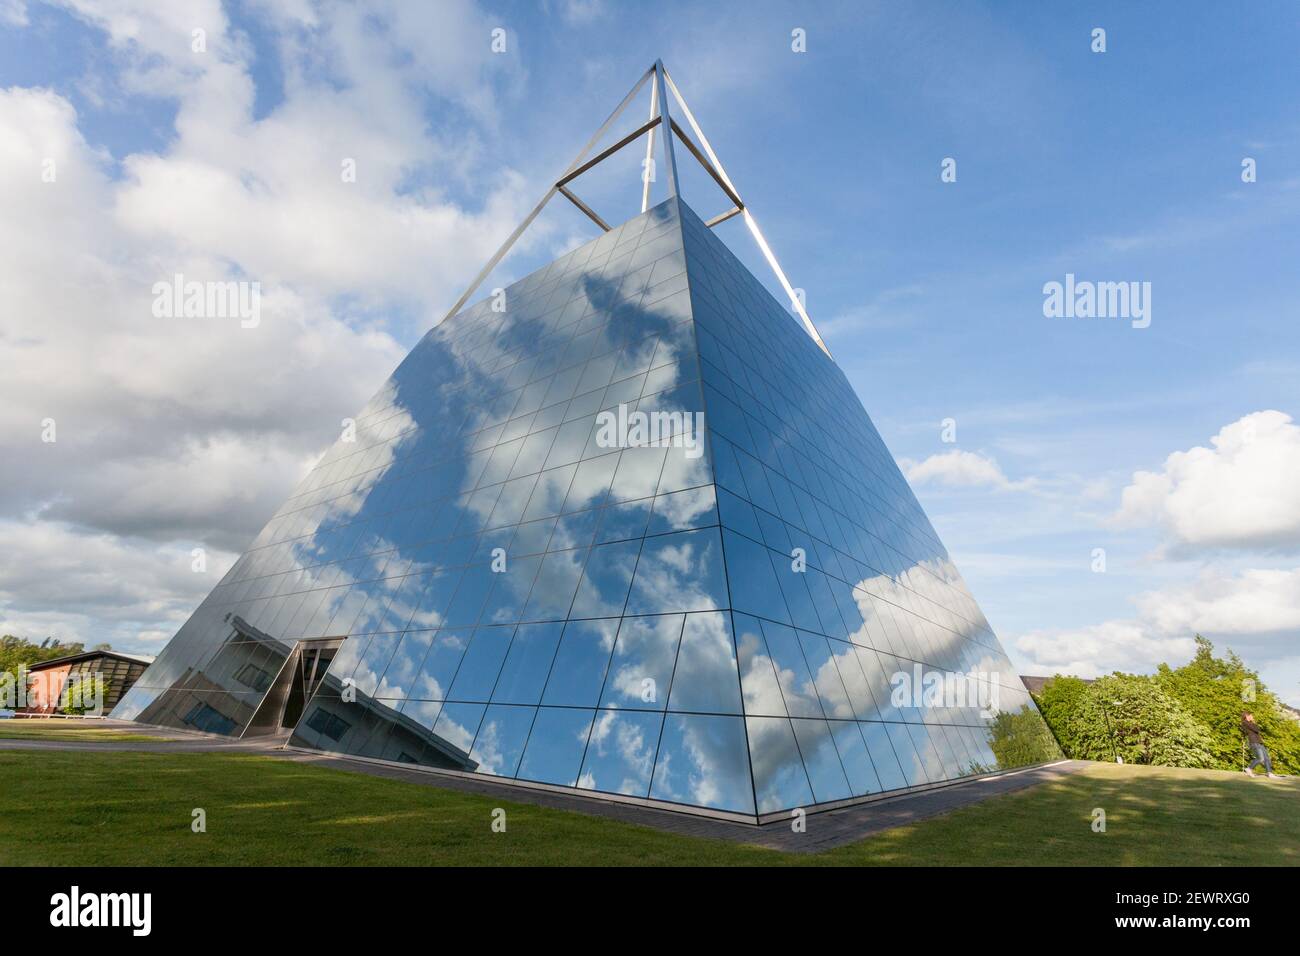 Triangular Pyramid Building